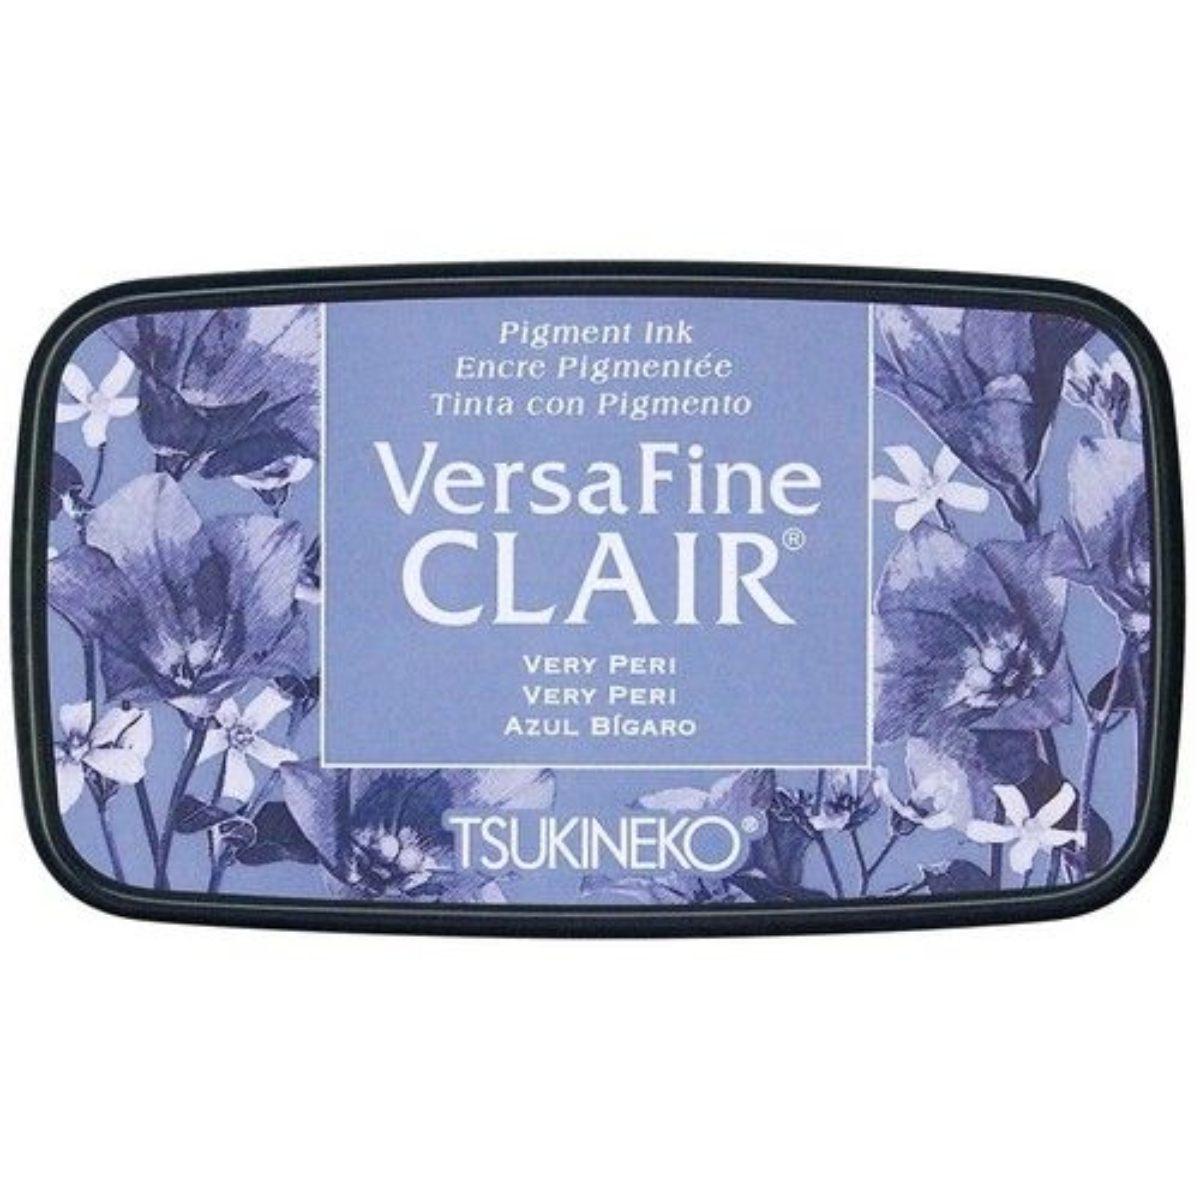 VersaFine Clair – Very Peri